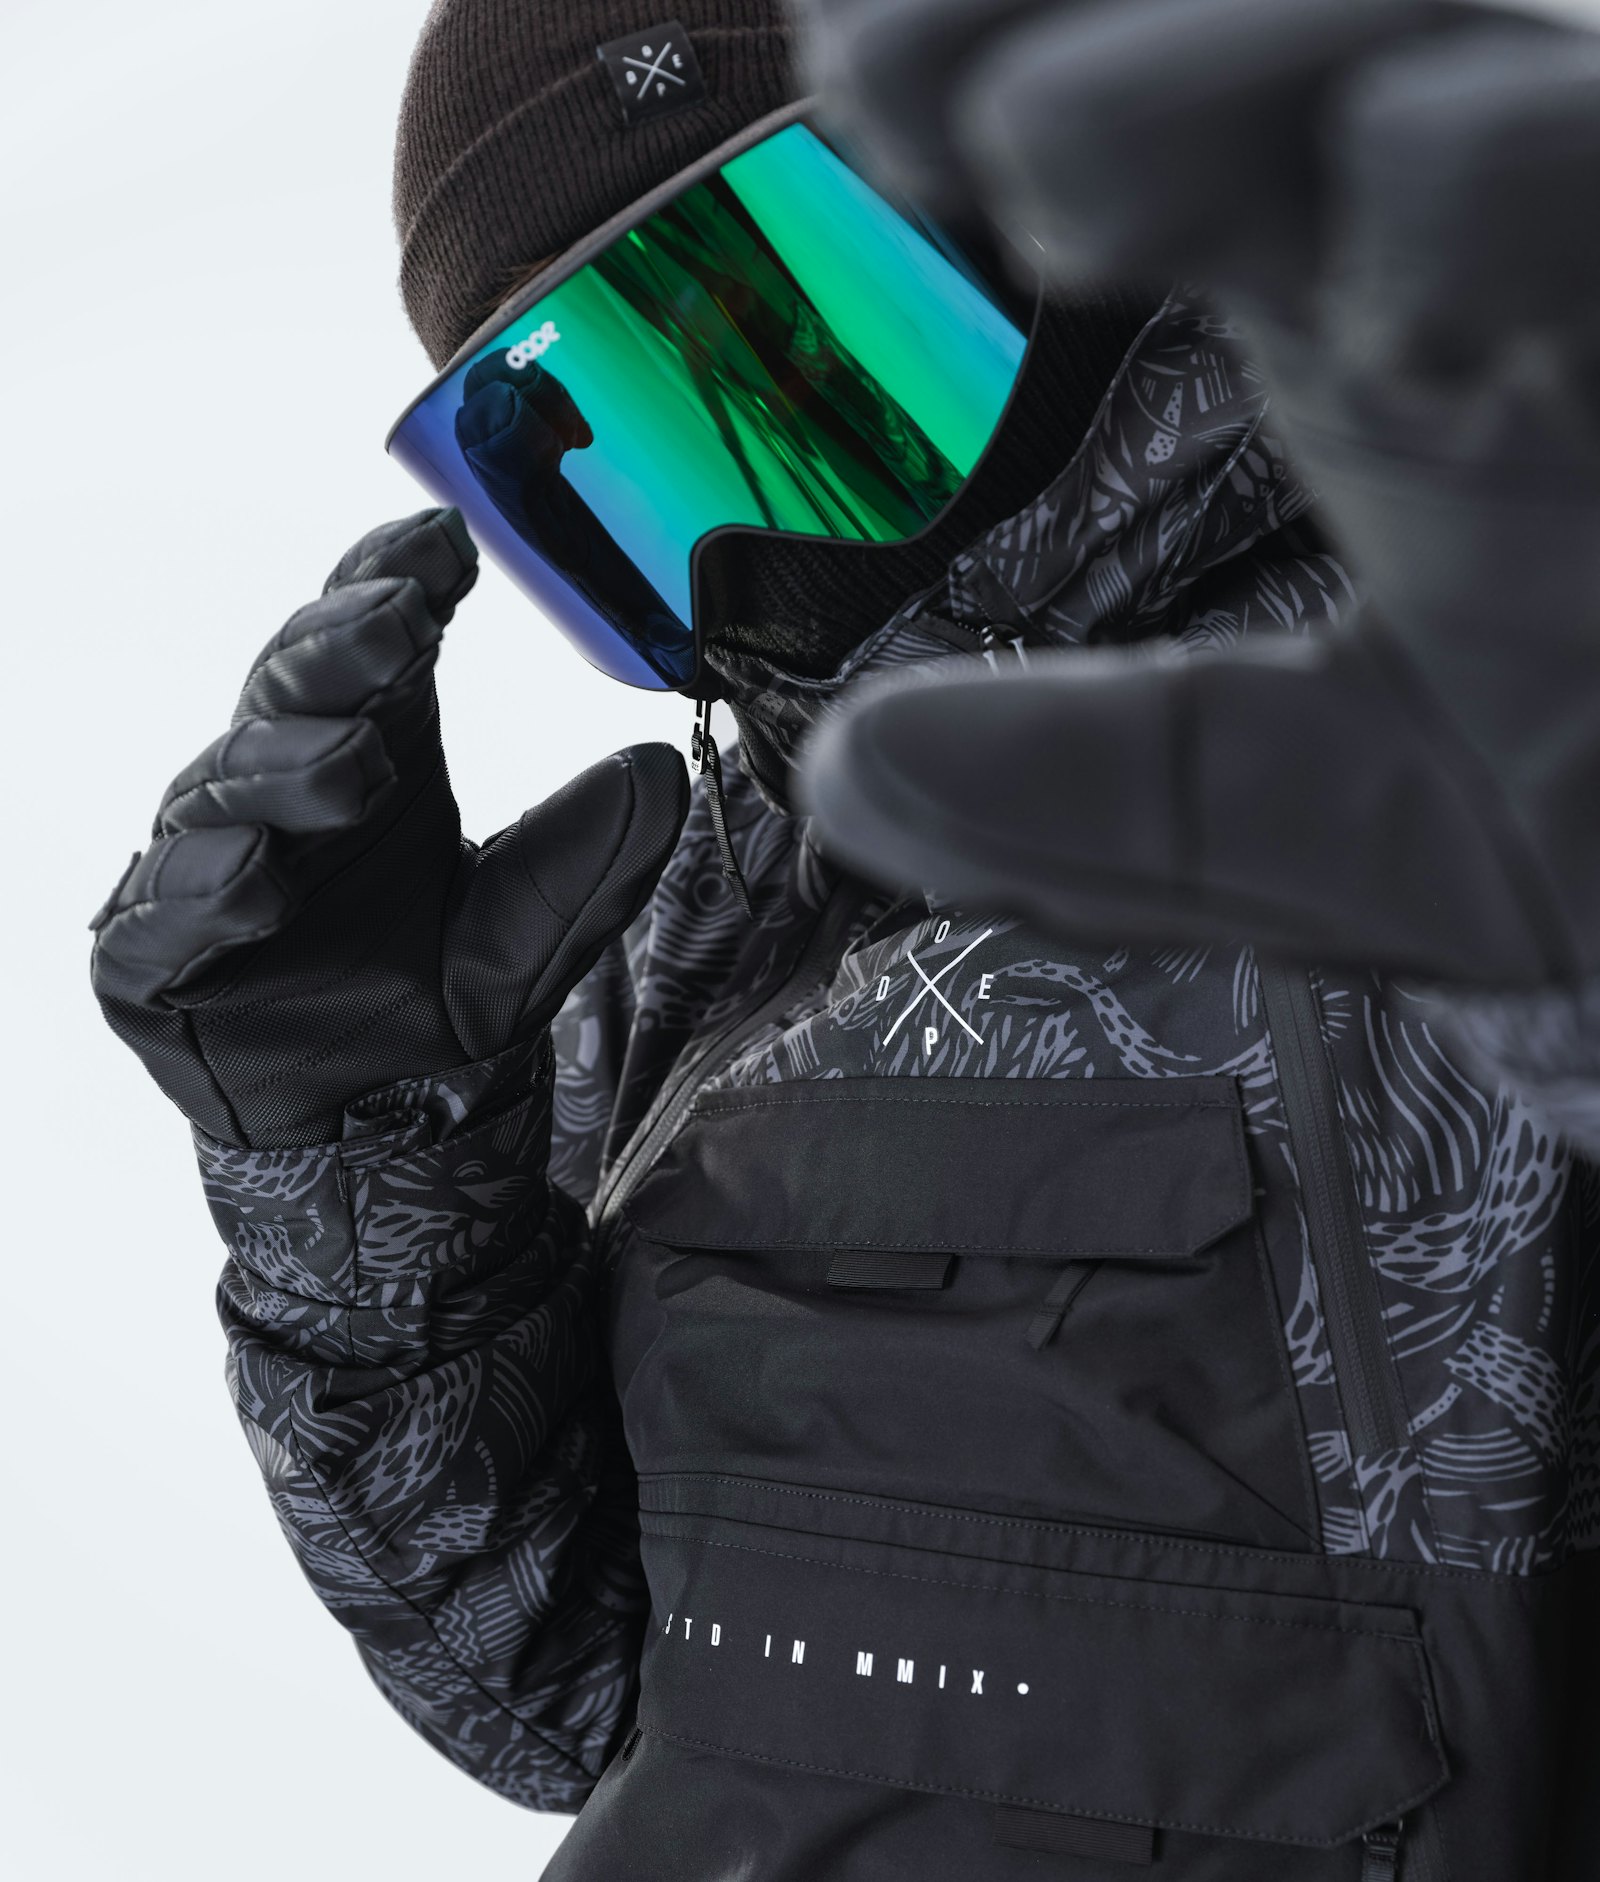 Akin 2020 Snowboard jas Heren Shallowtree/Black